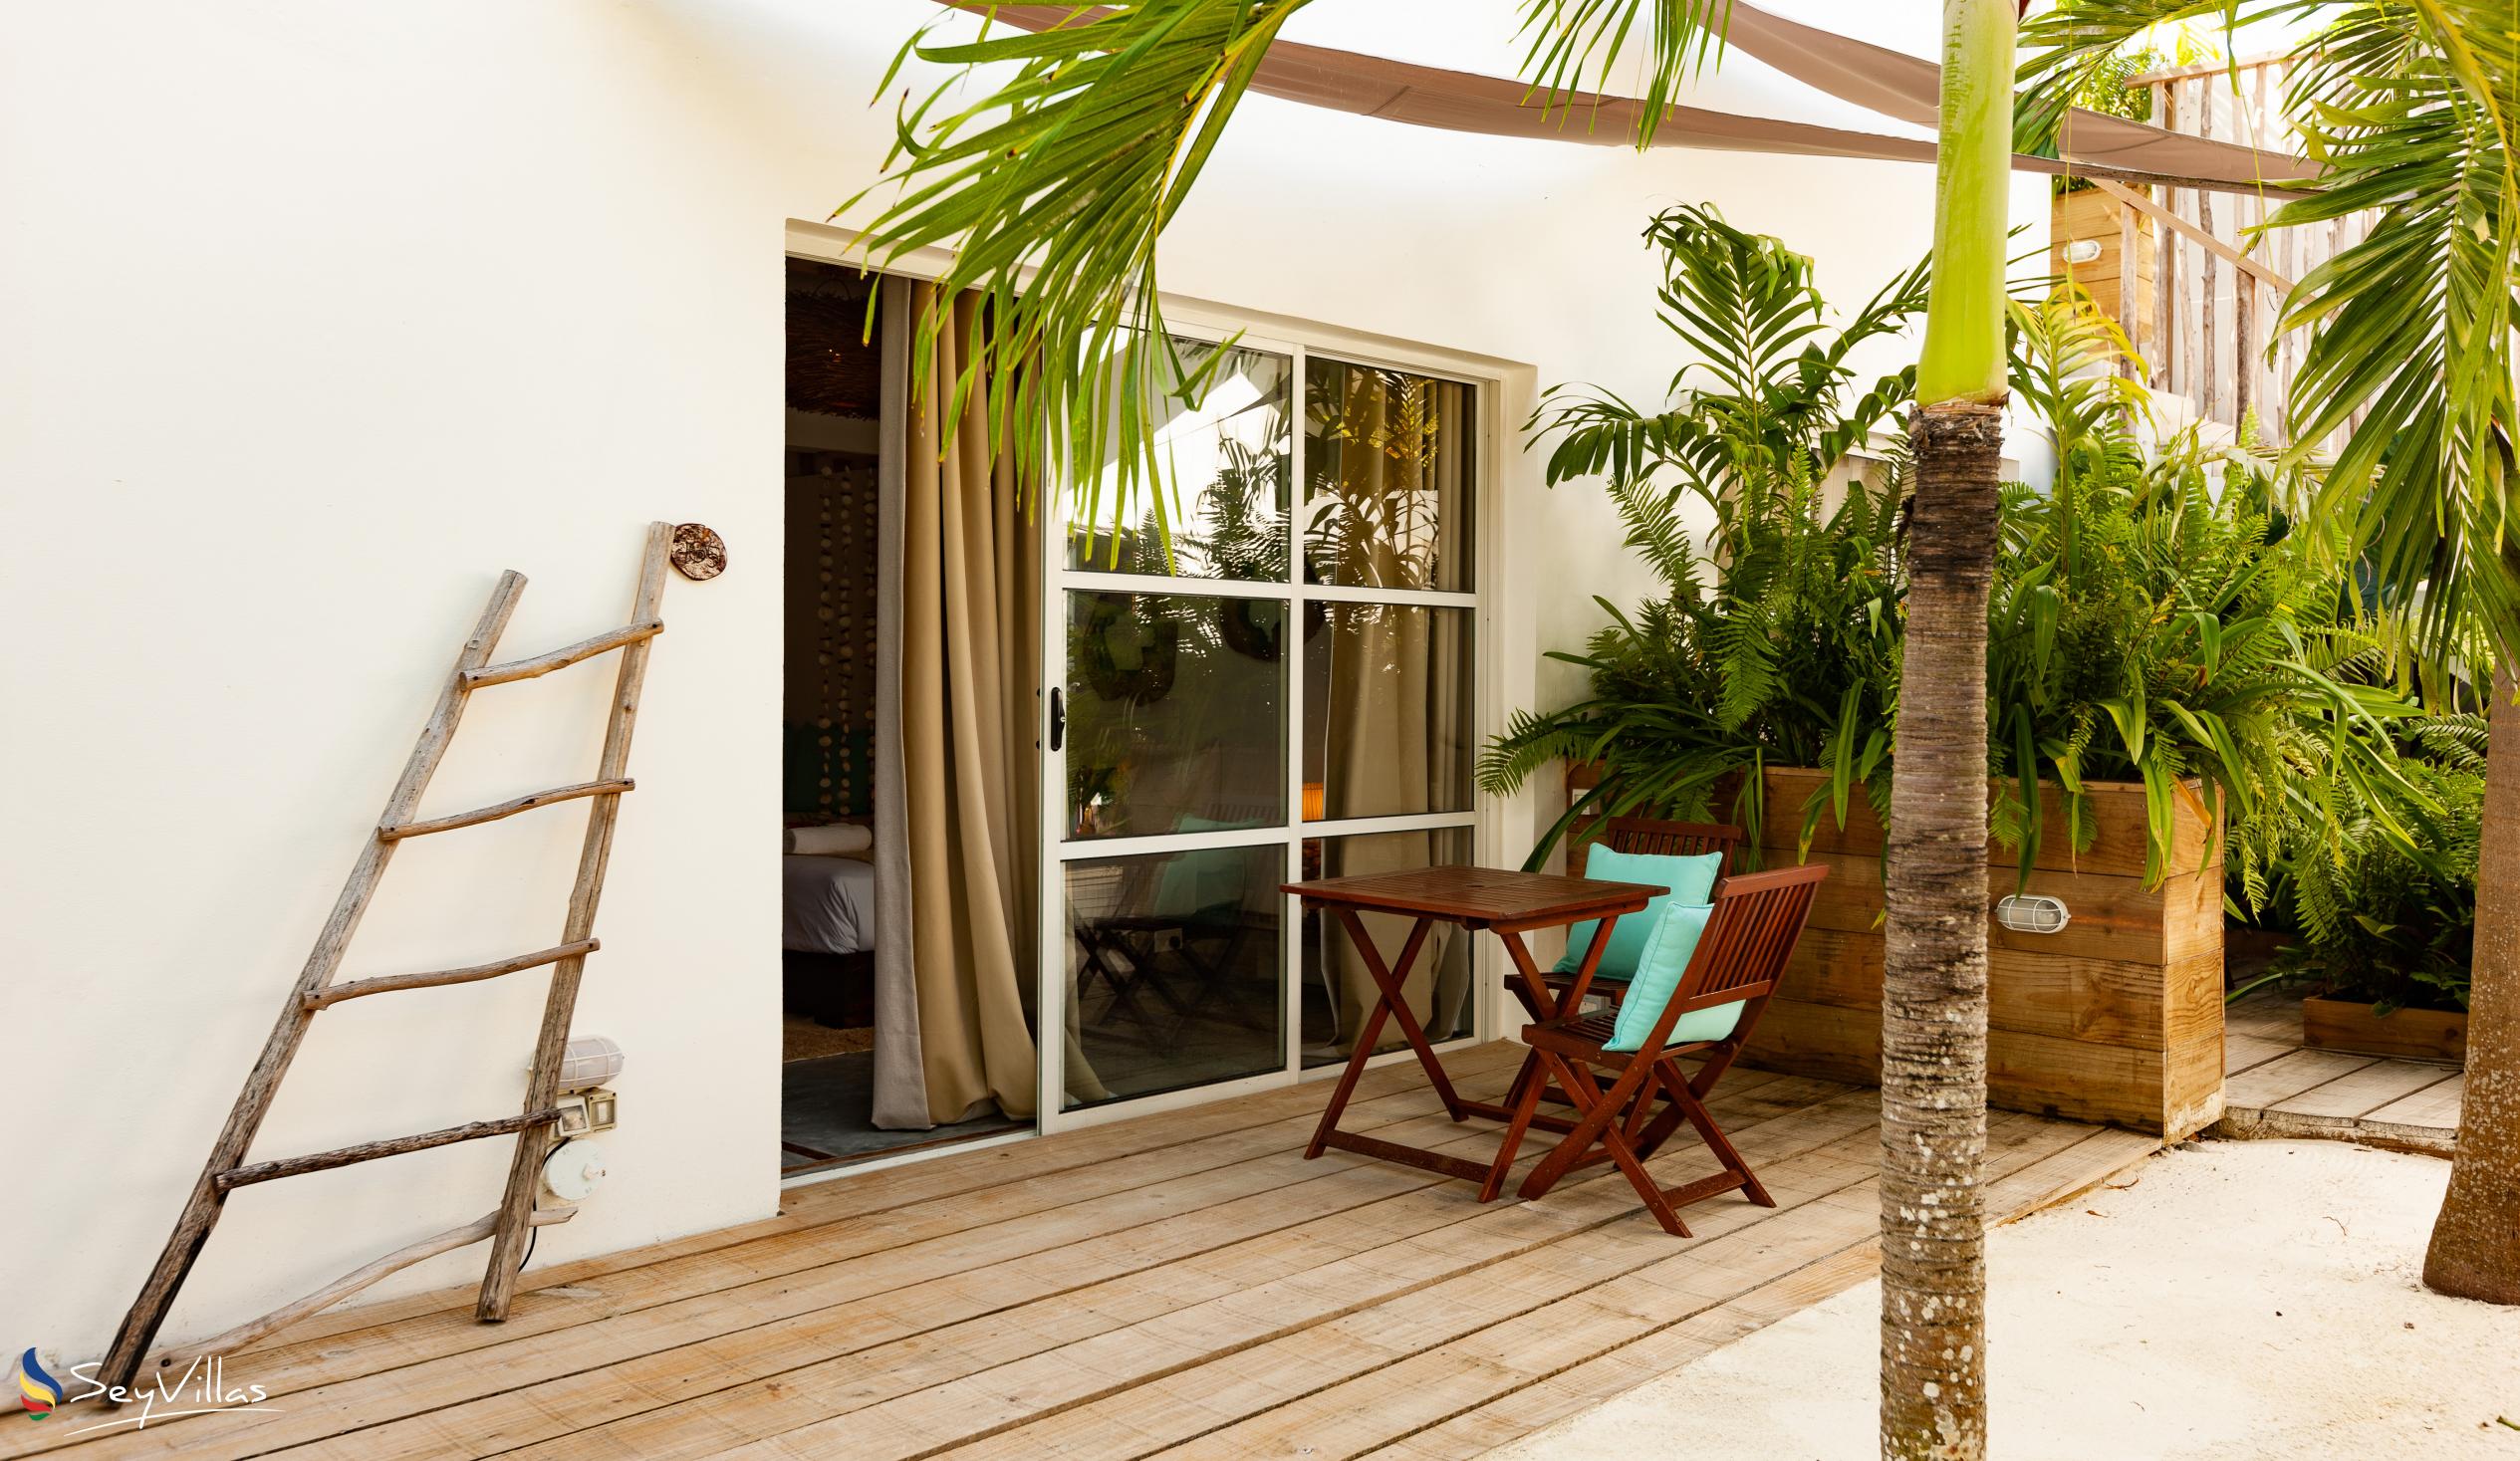 Foto 91: Bliss Hotel Praslin - Beach House - Camera Beach Garden Room - Praslin (Seychelles)